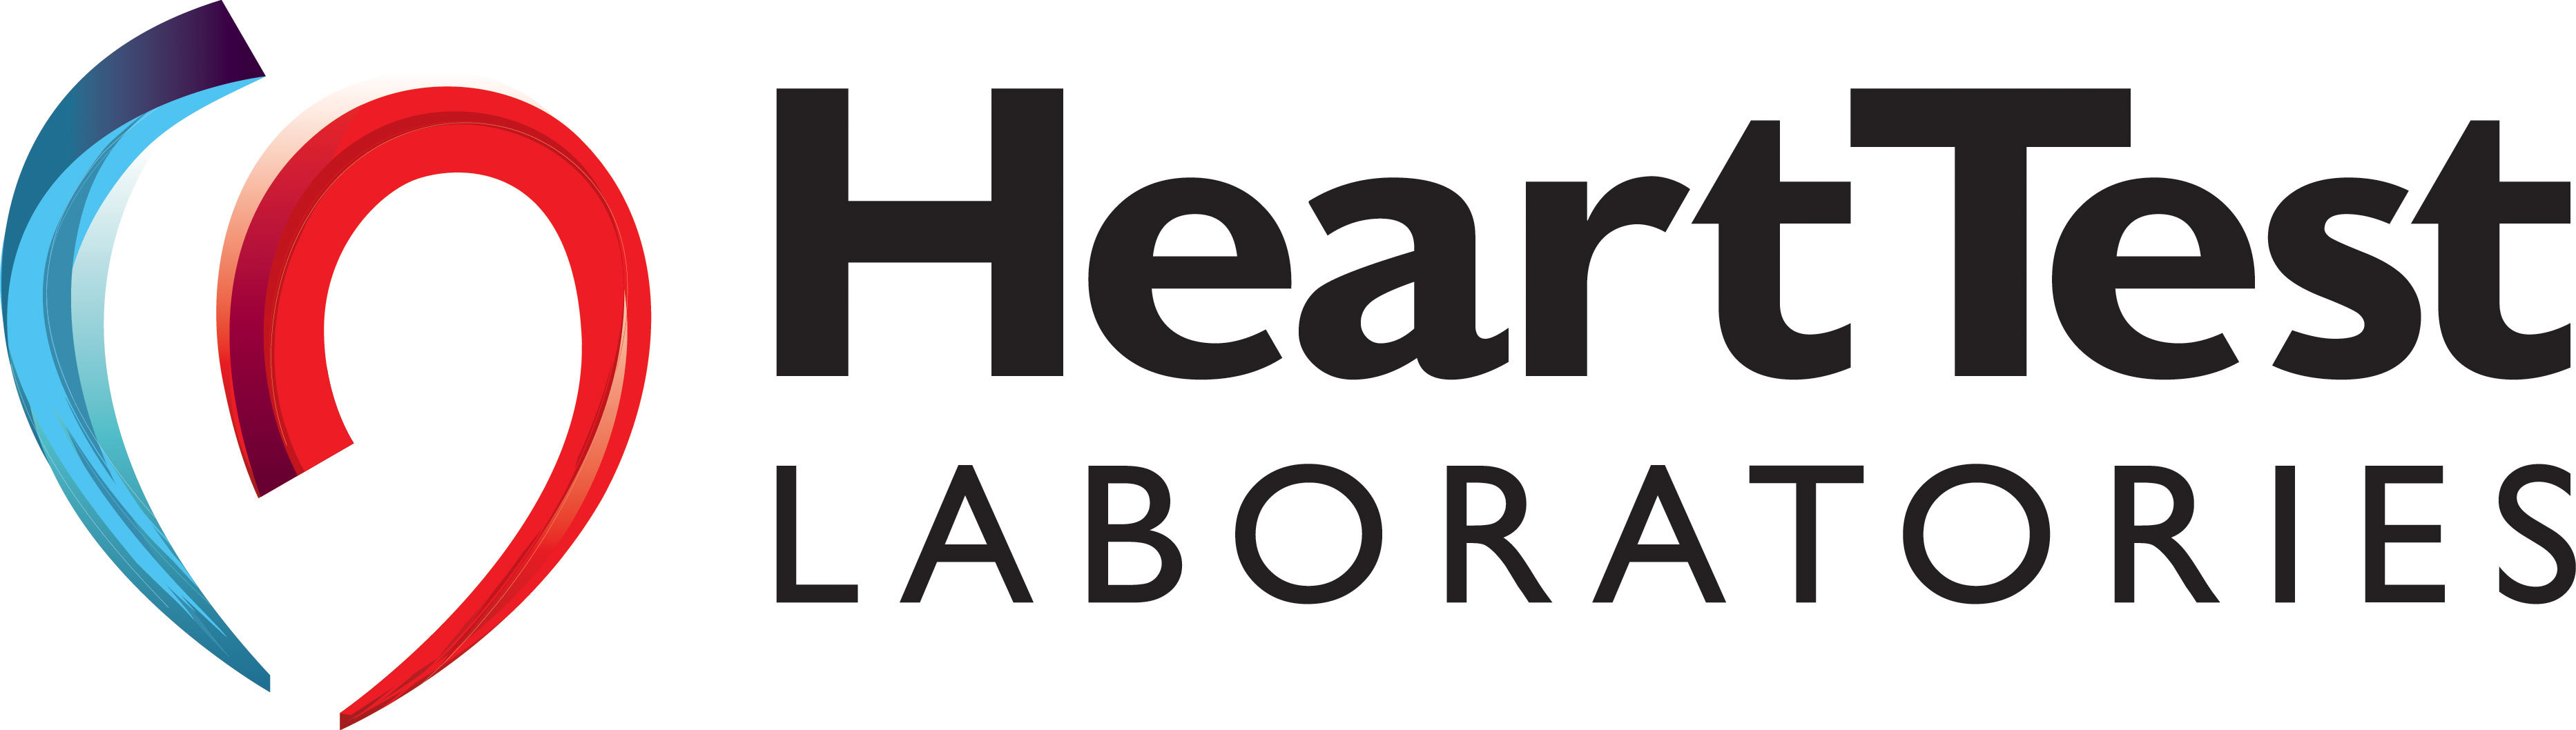 Heart Test Laboratories